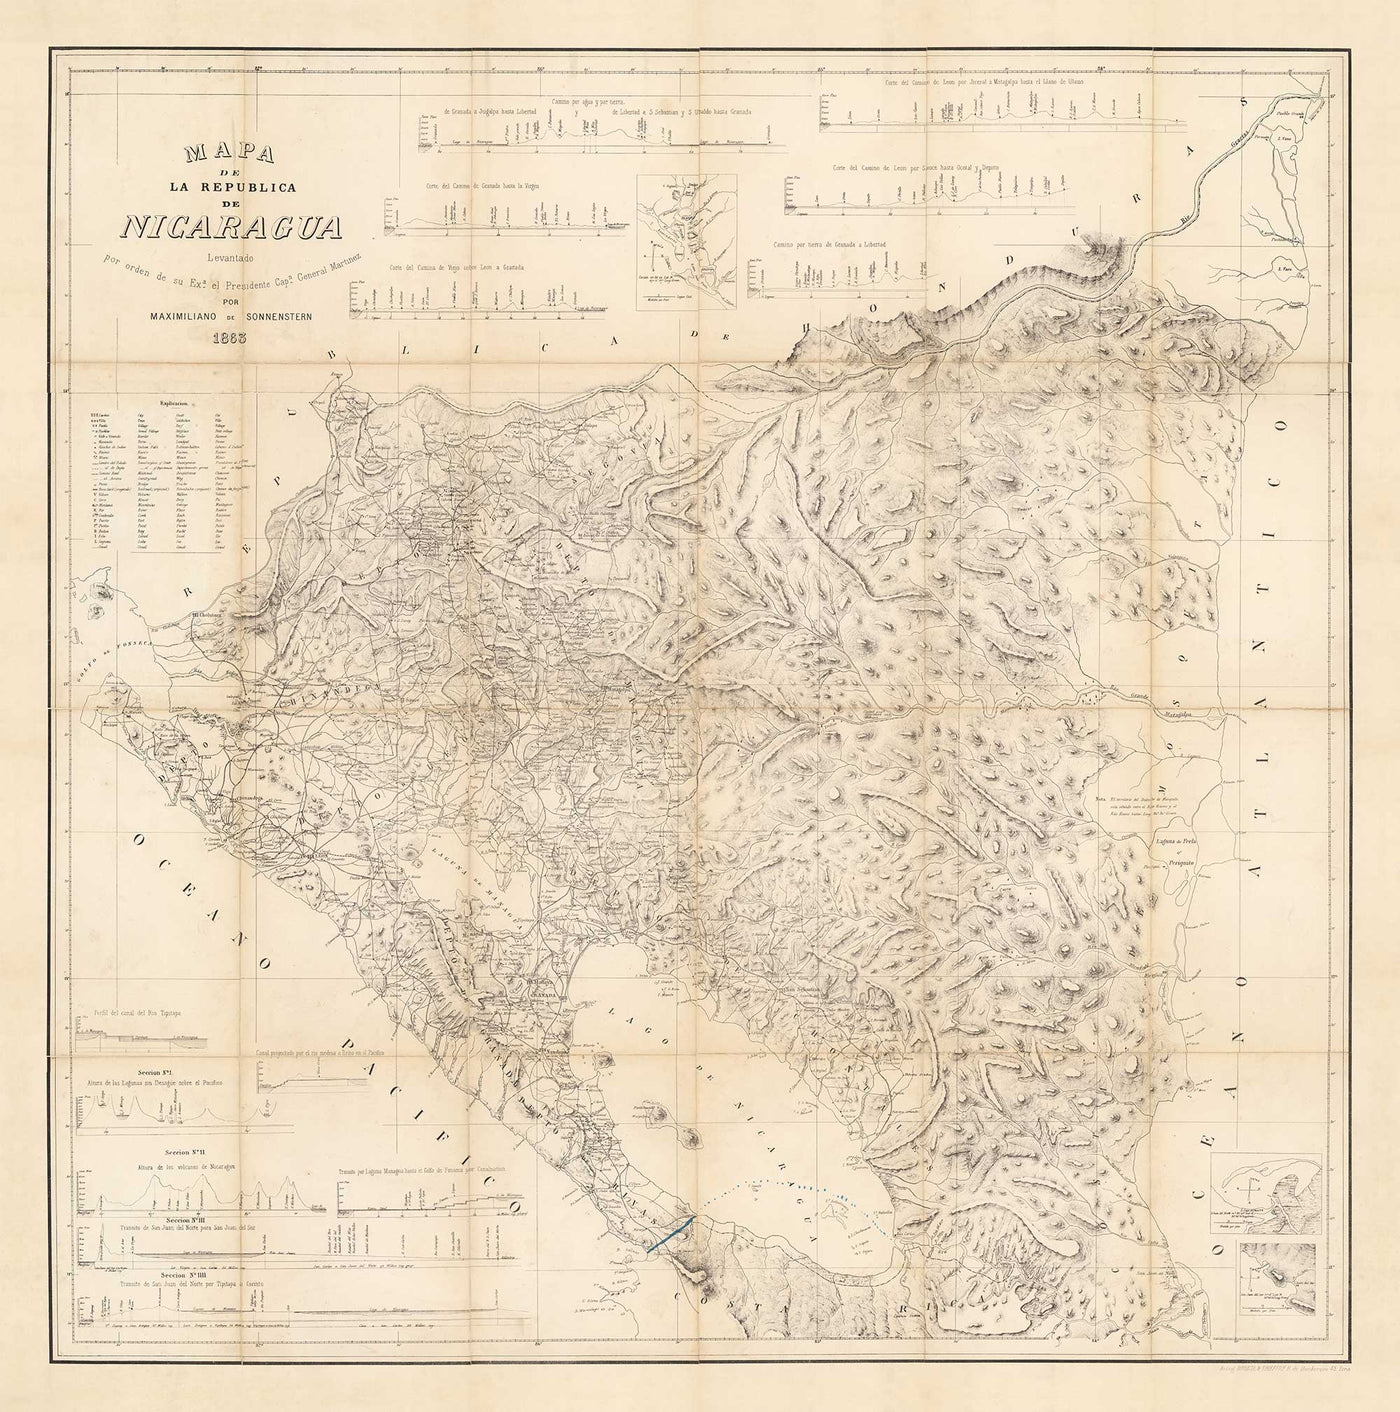 Old Map of Nicaragua in 1863 by Sonnestern - Managua, Leon, Chinandega, Esteli, Lake Nicaragua